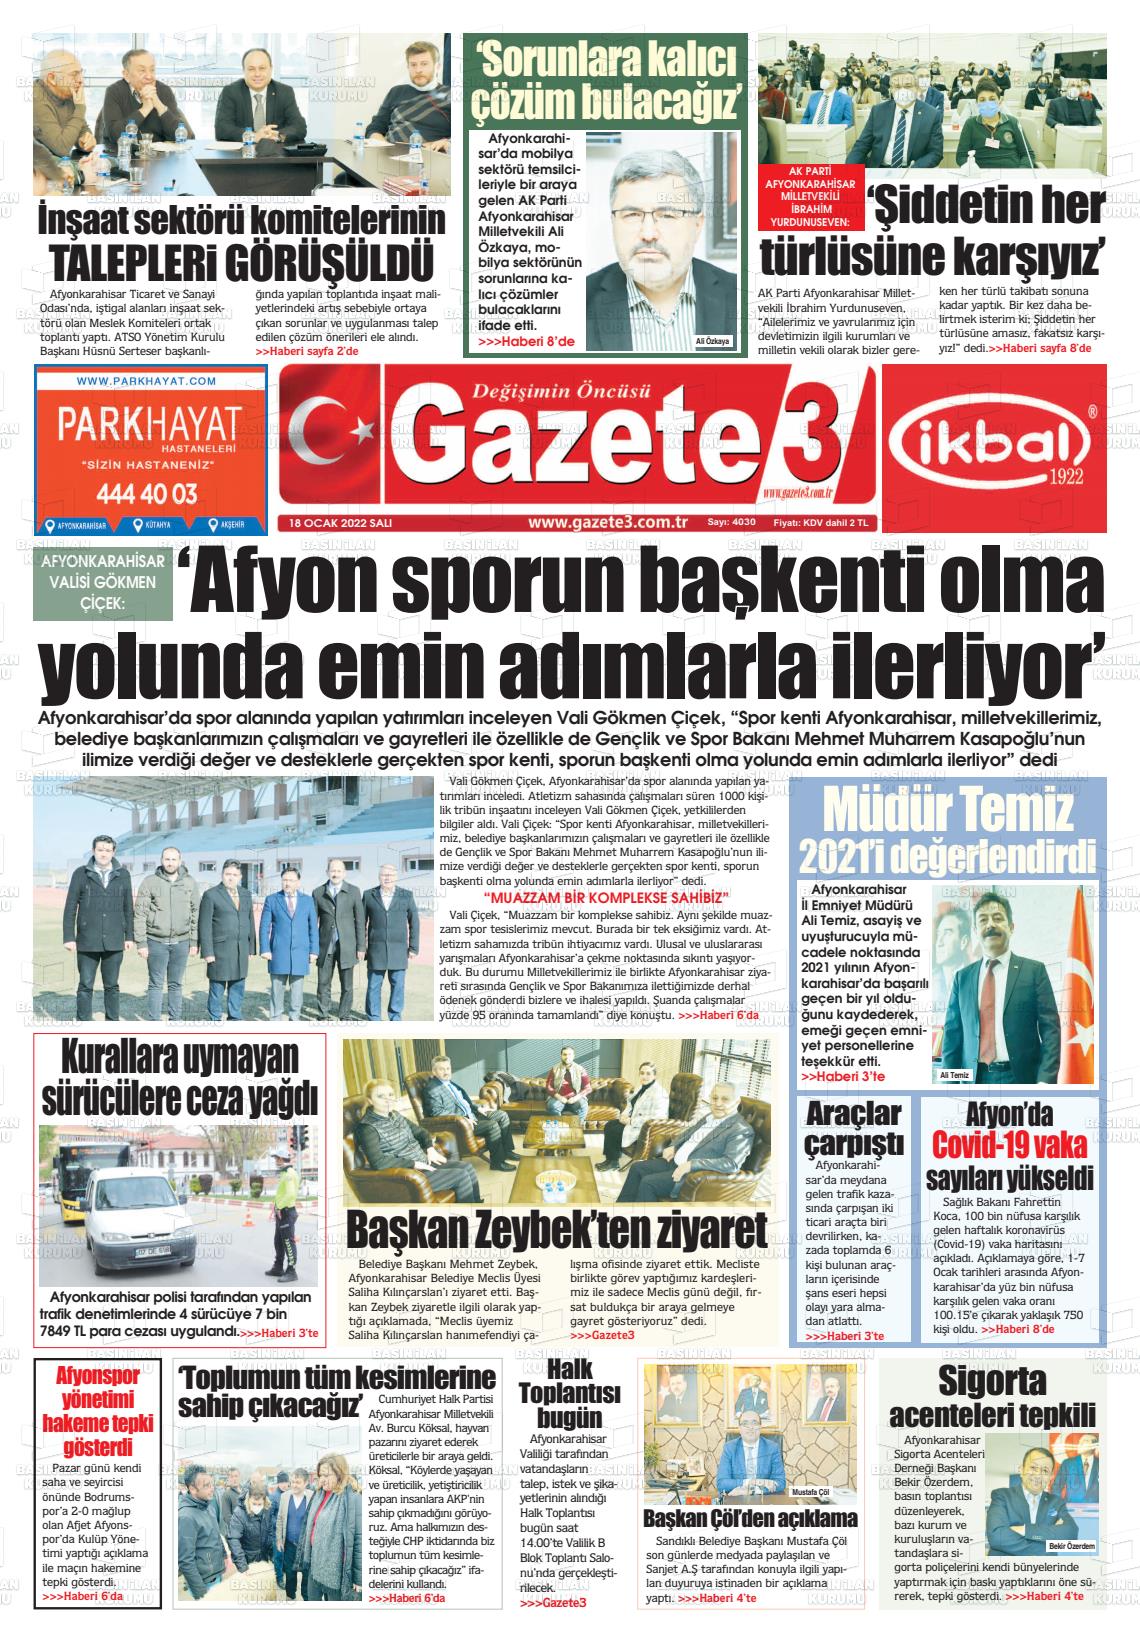 18 Ocak 2022 Gazete 3 Gazete Manşeti